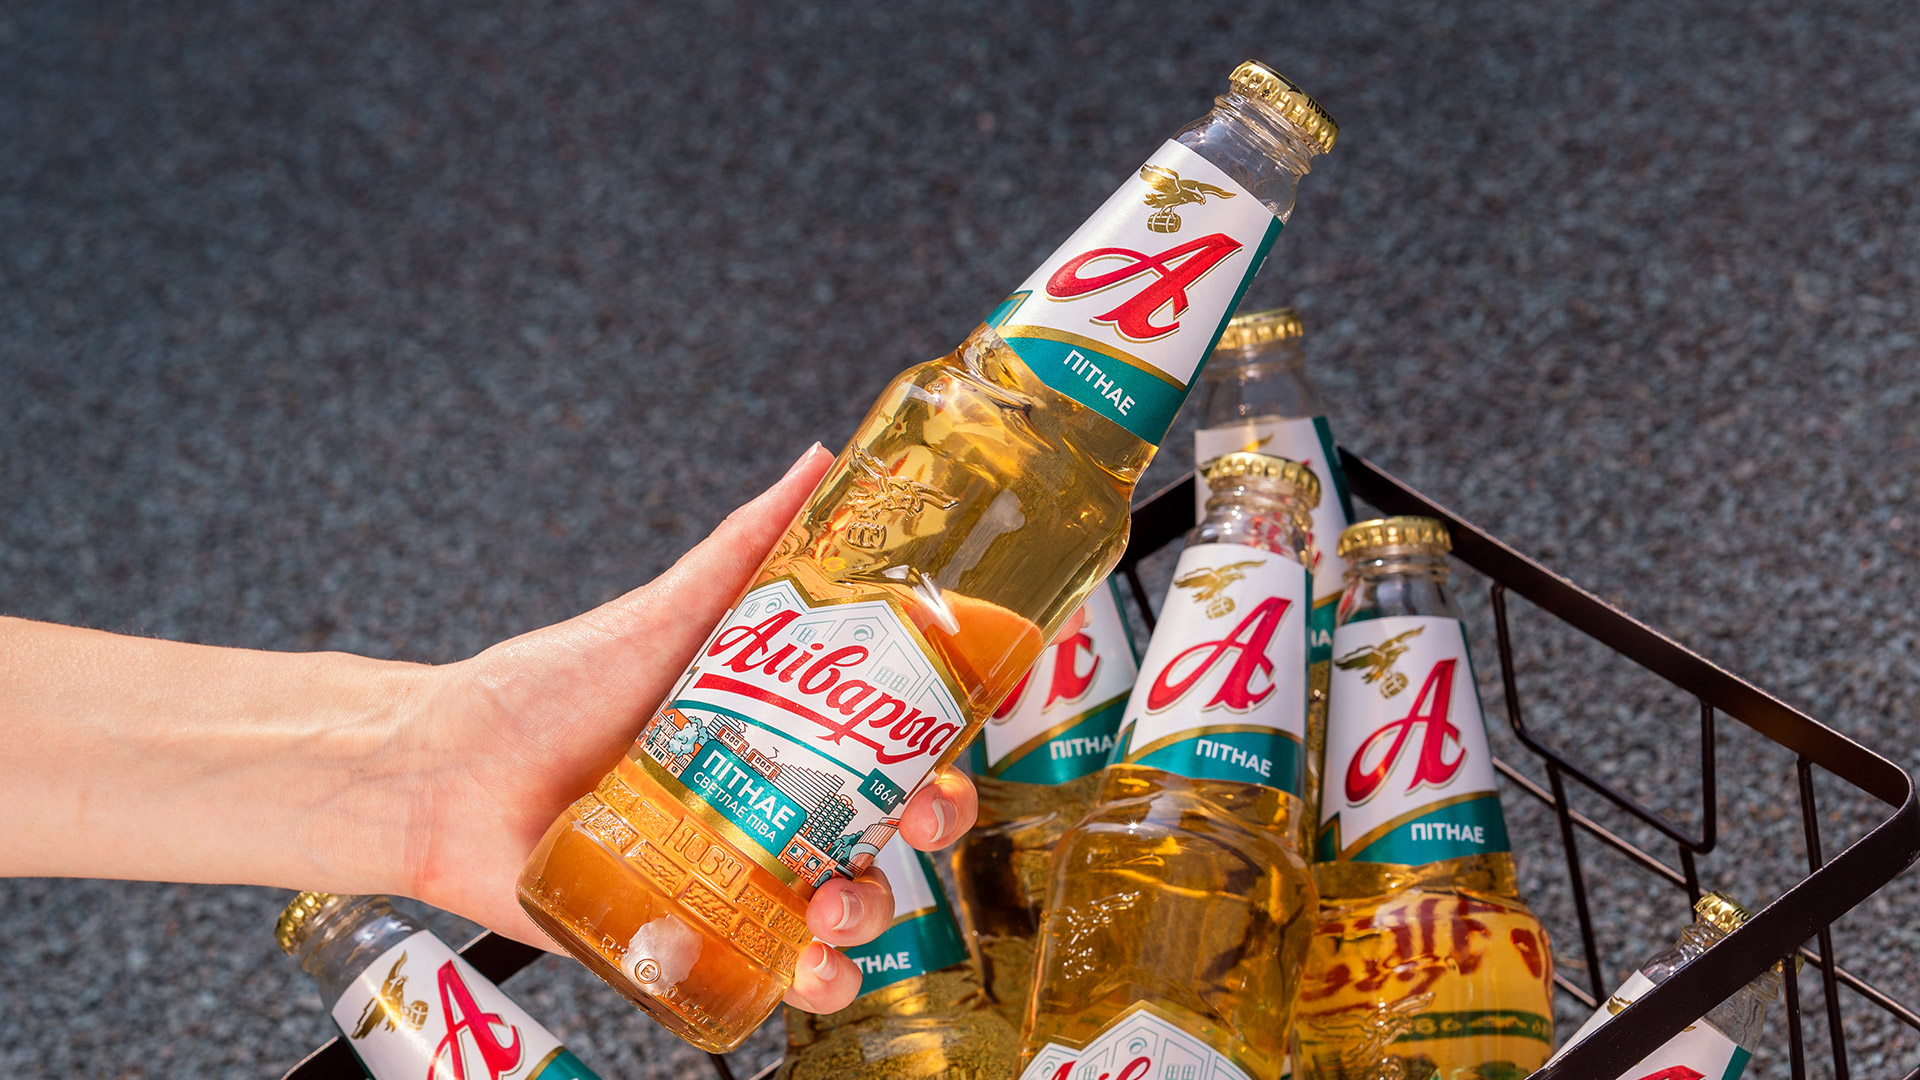 Alivaria's Pitnae Beer: meet the summer image